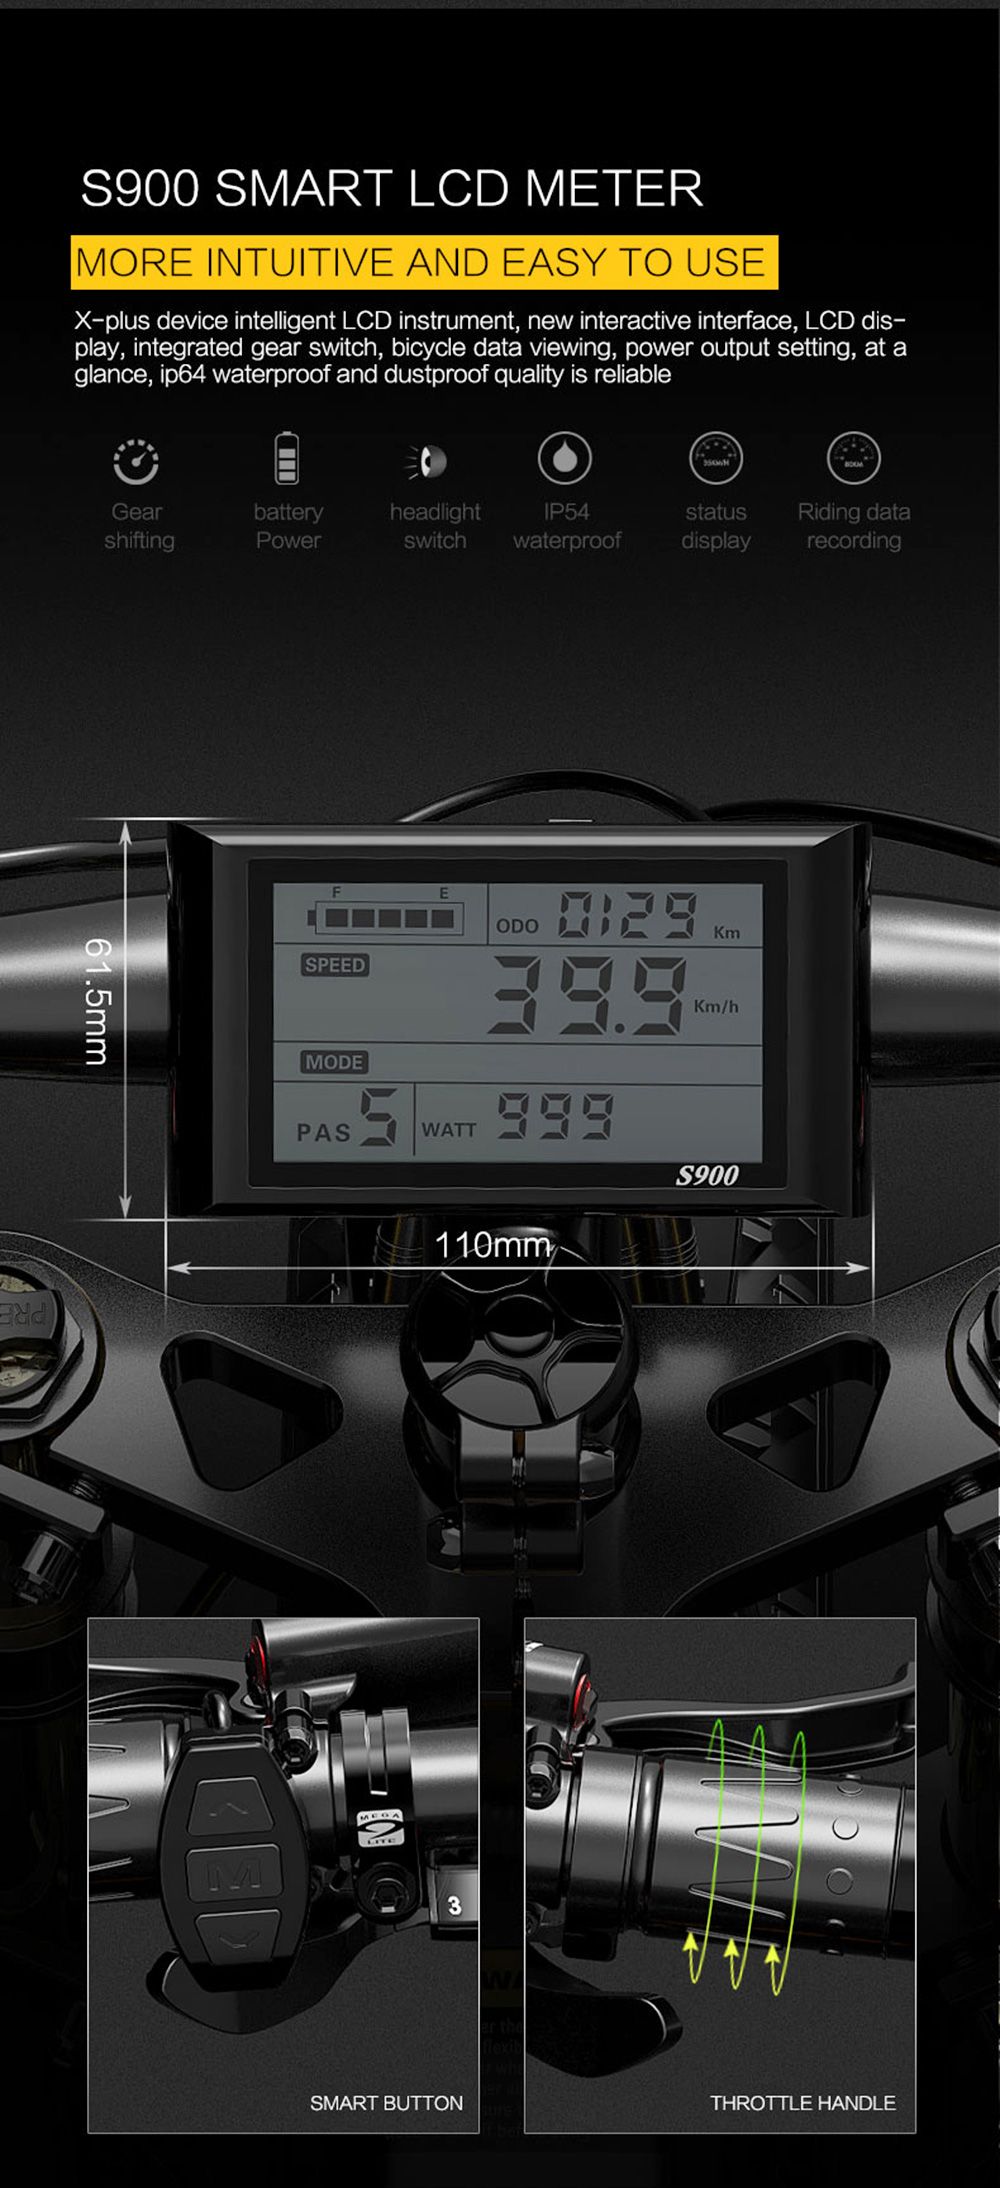 BEZIOR X-PLUS Electric Bike 1500W Motor 48V 17.5Ah Battery 26*4.0 Tire Mountain Bike 40 km/h Max Speed 200kg Load - Blue